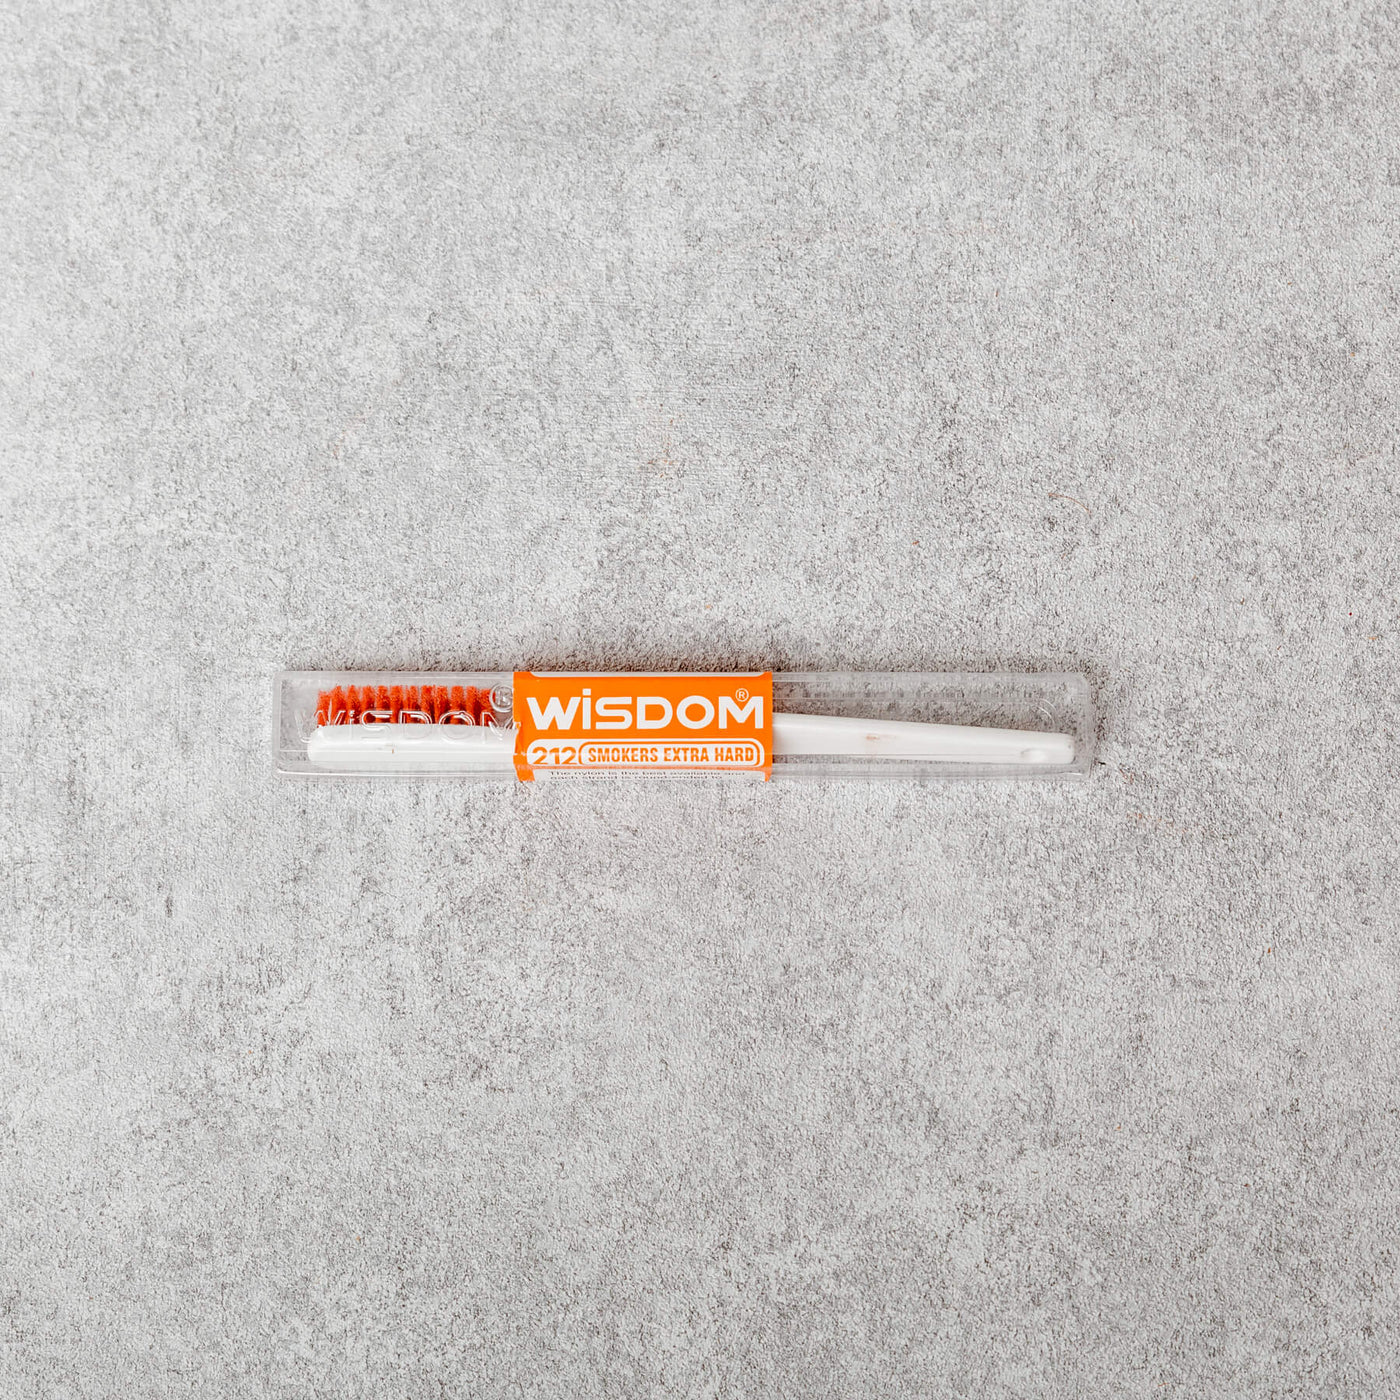 Wisdom - toothbrush